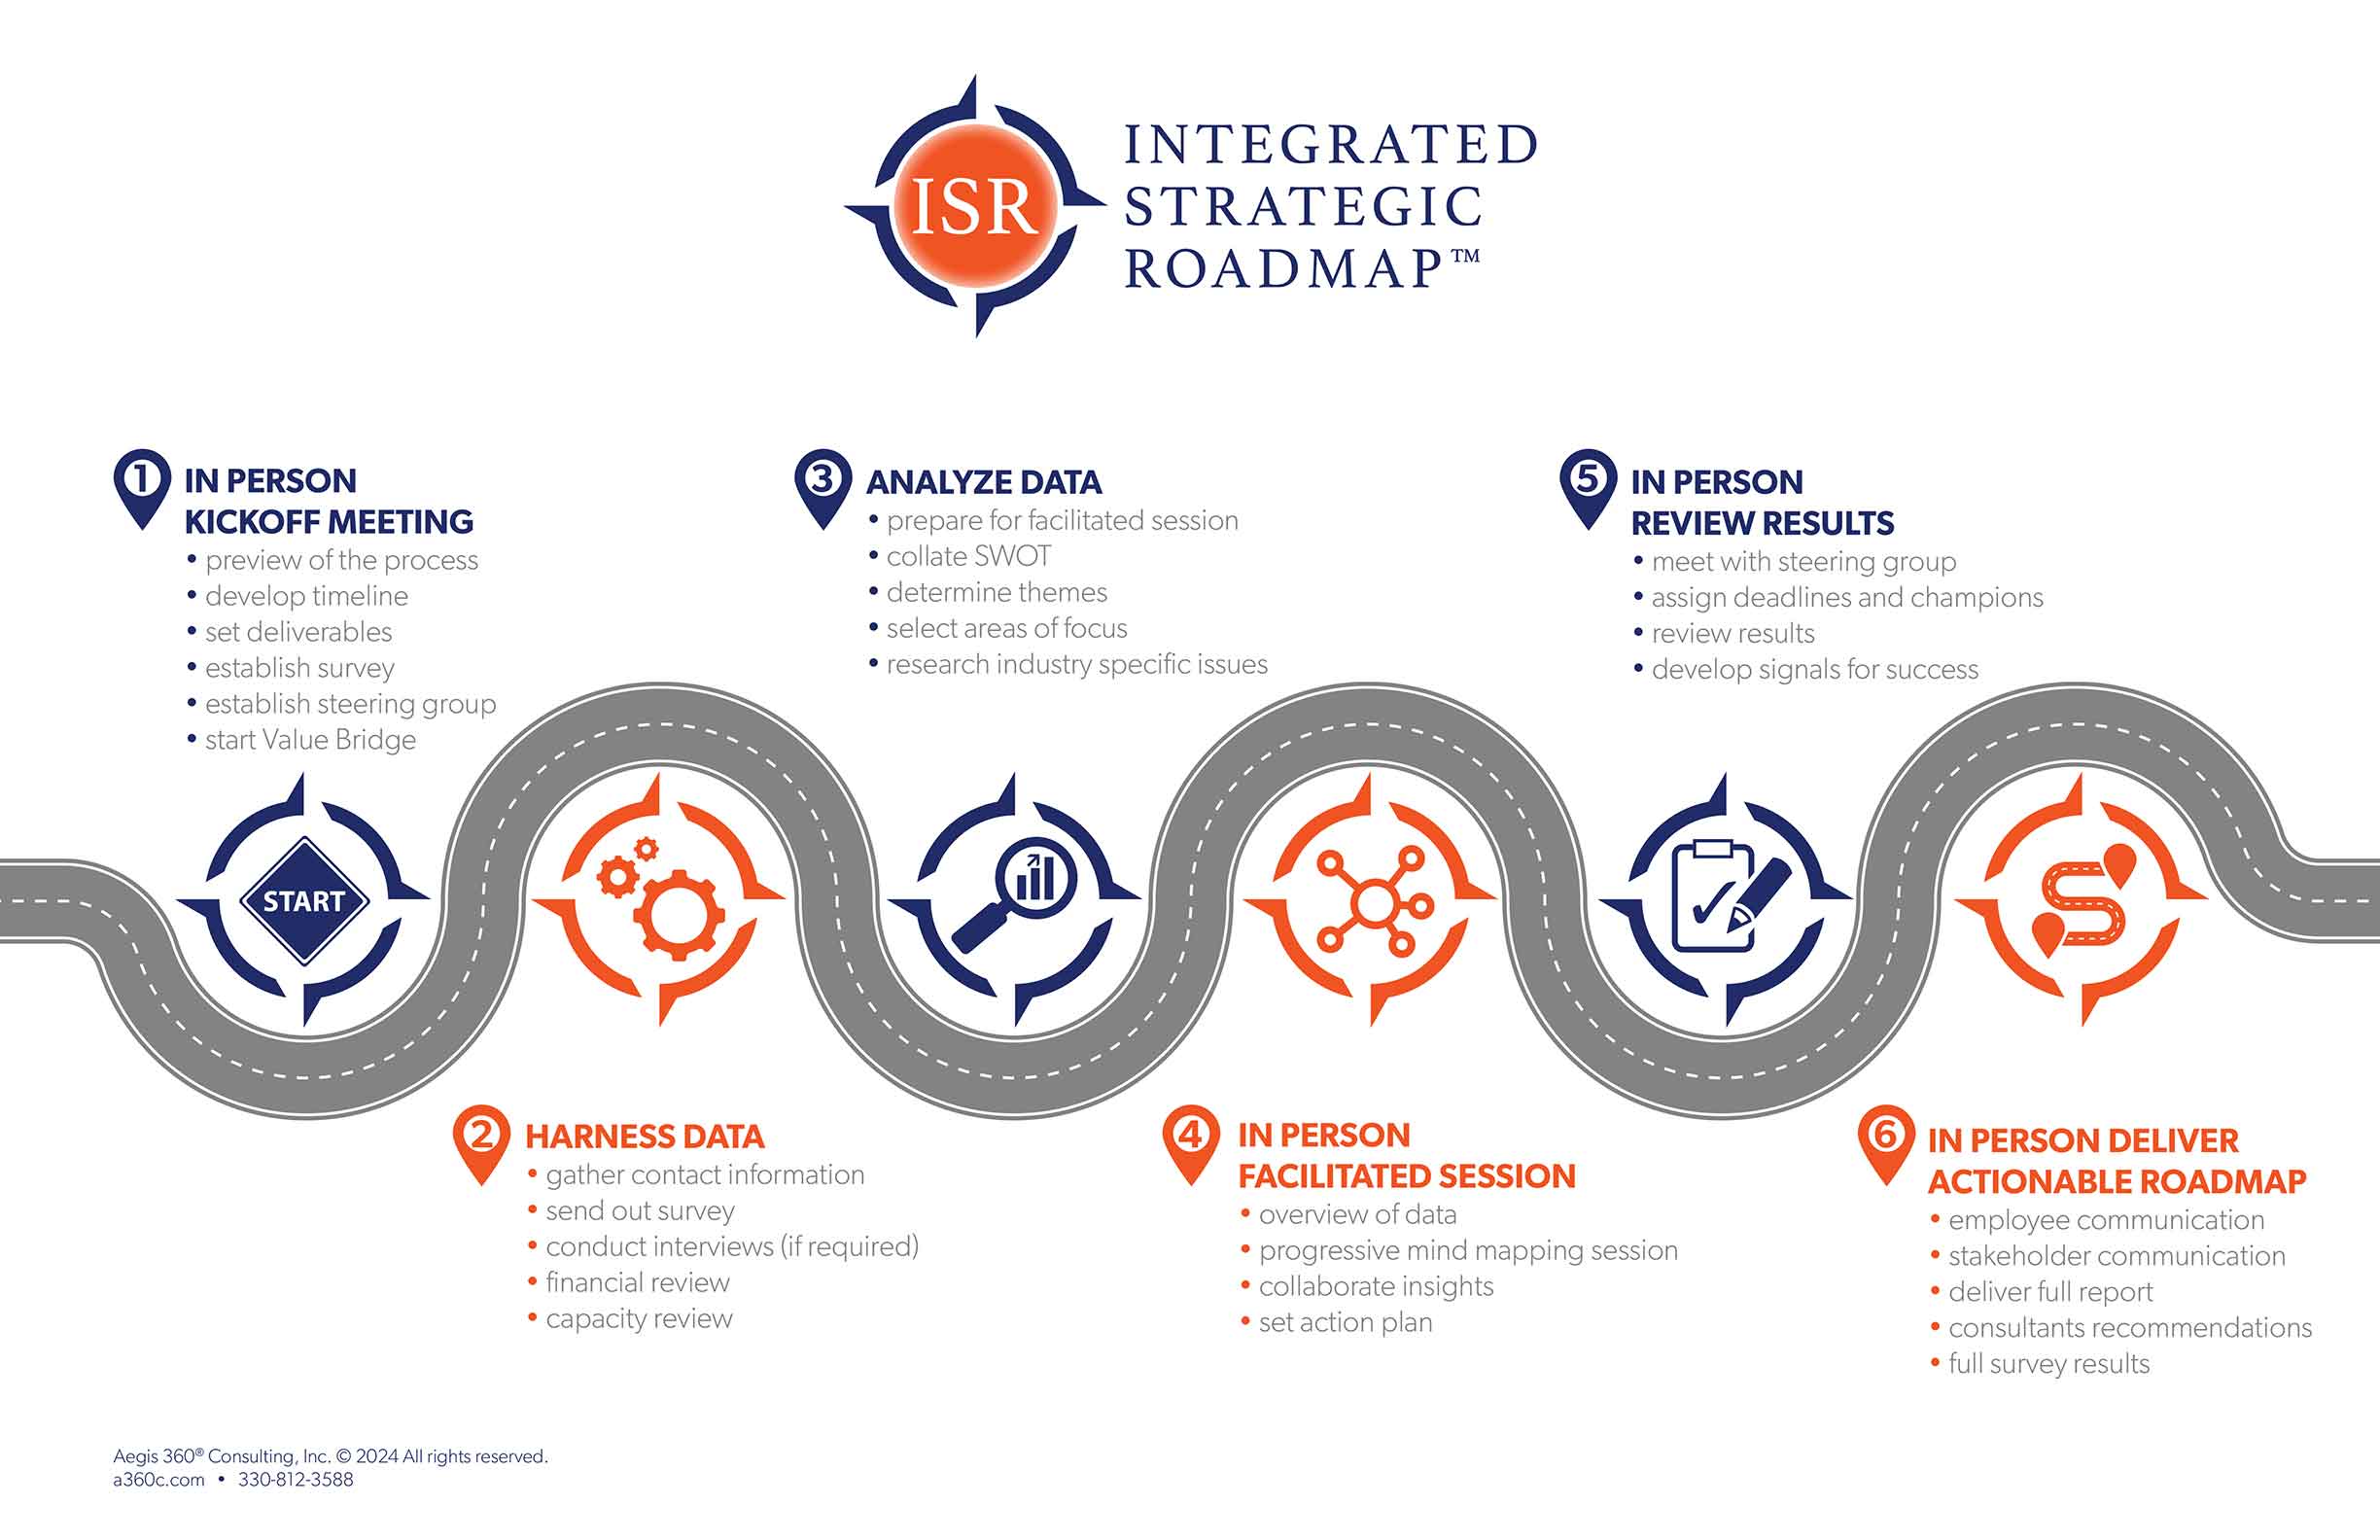 Image of the Aegis360 Integrated Strategic Roadmap